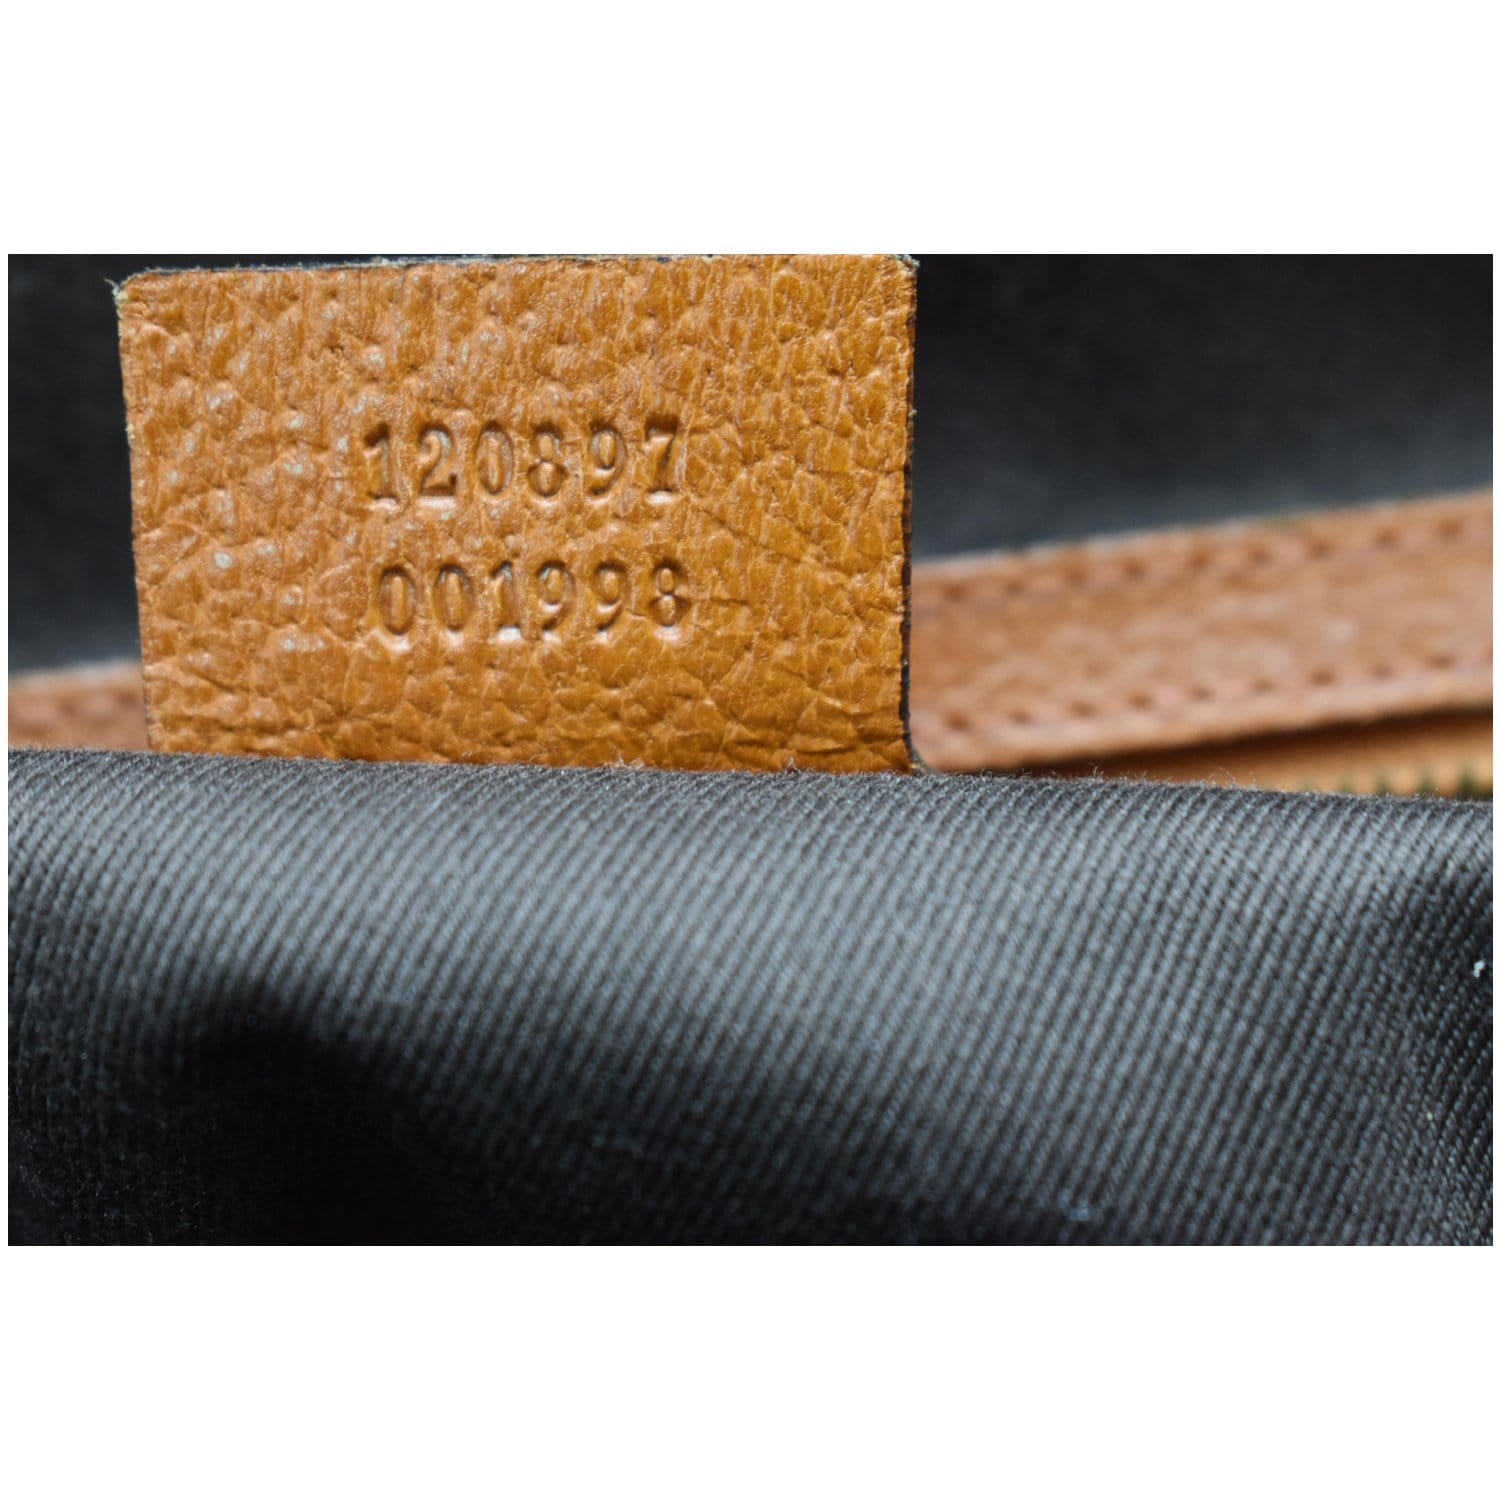 Gucci GG Canvas Nailhead Pochette - ShopStyle Satchels & Top Handle Bags